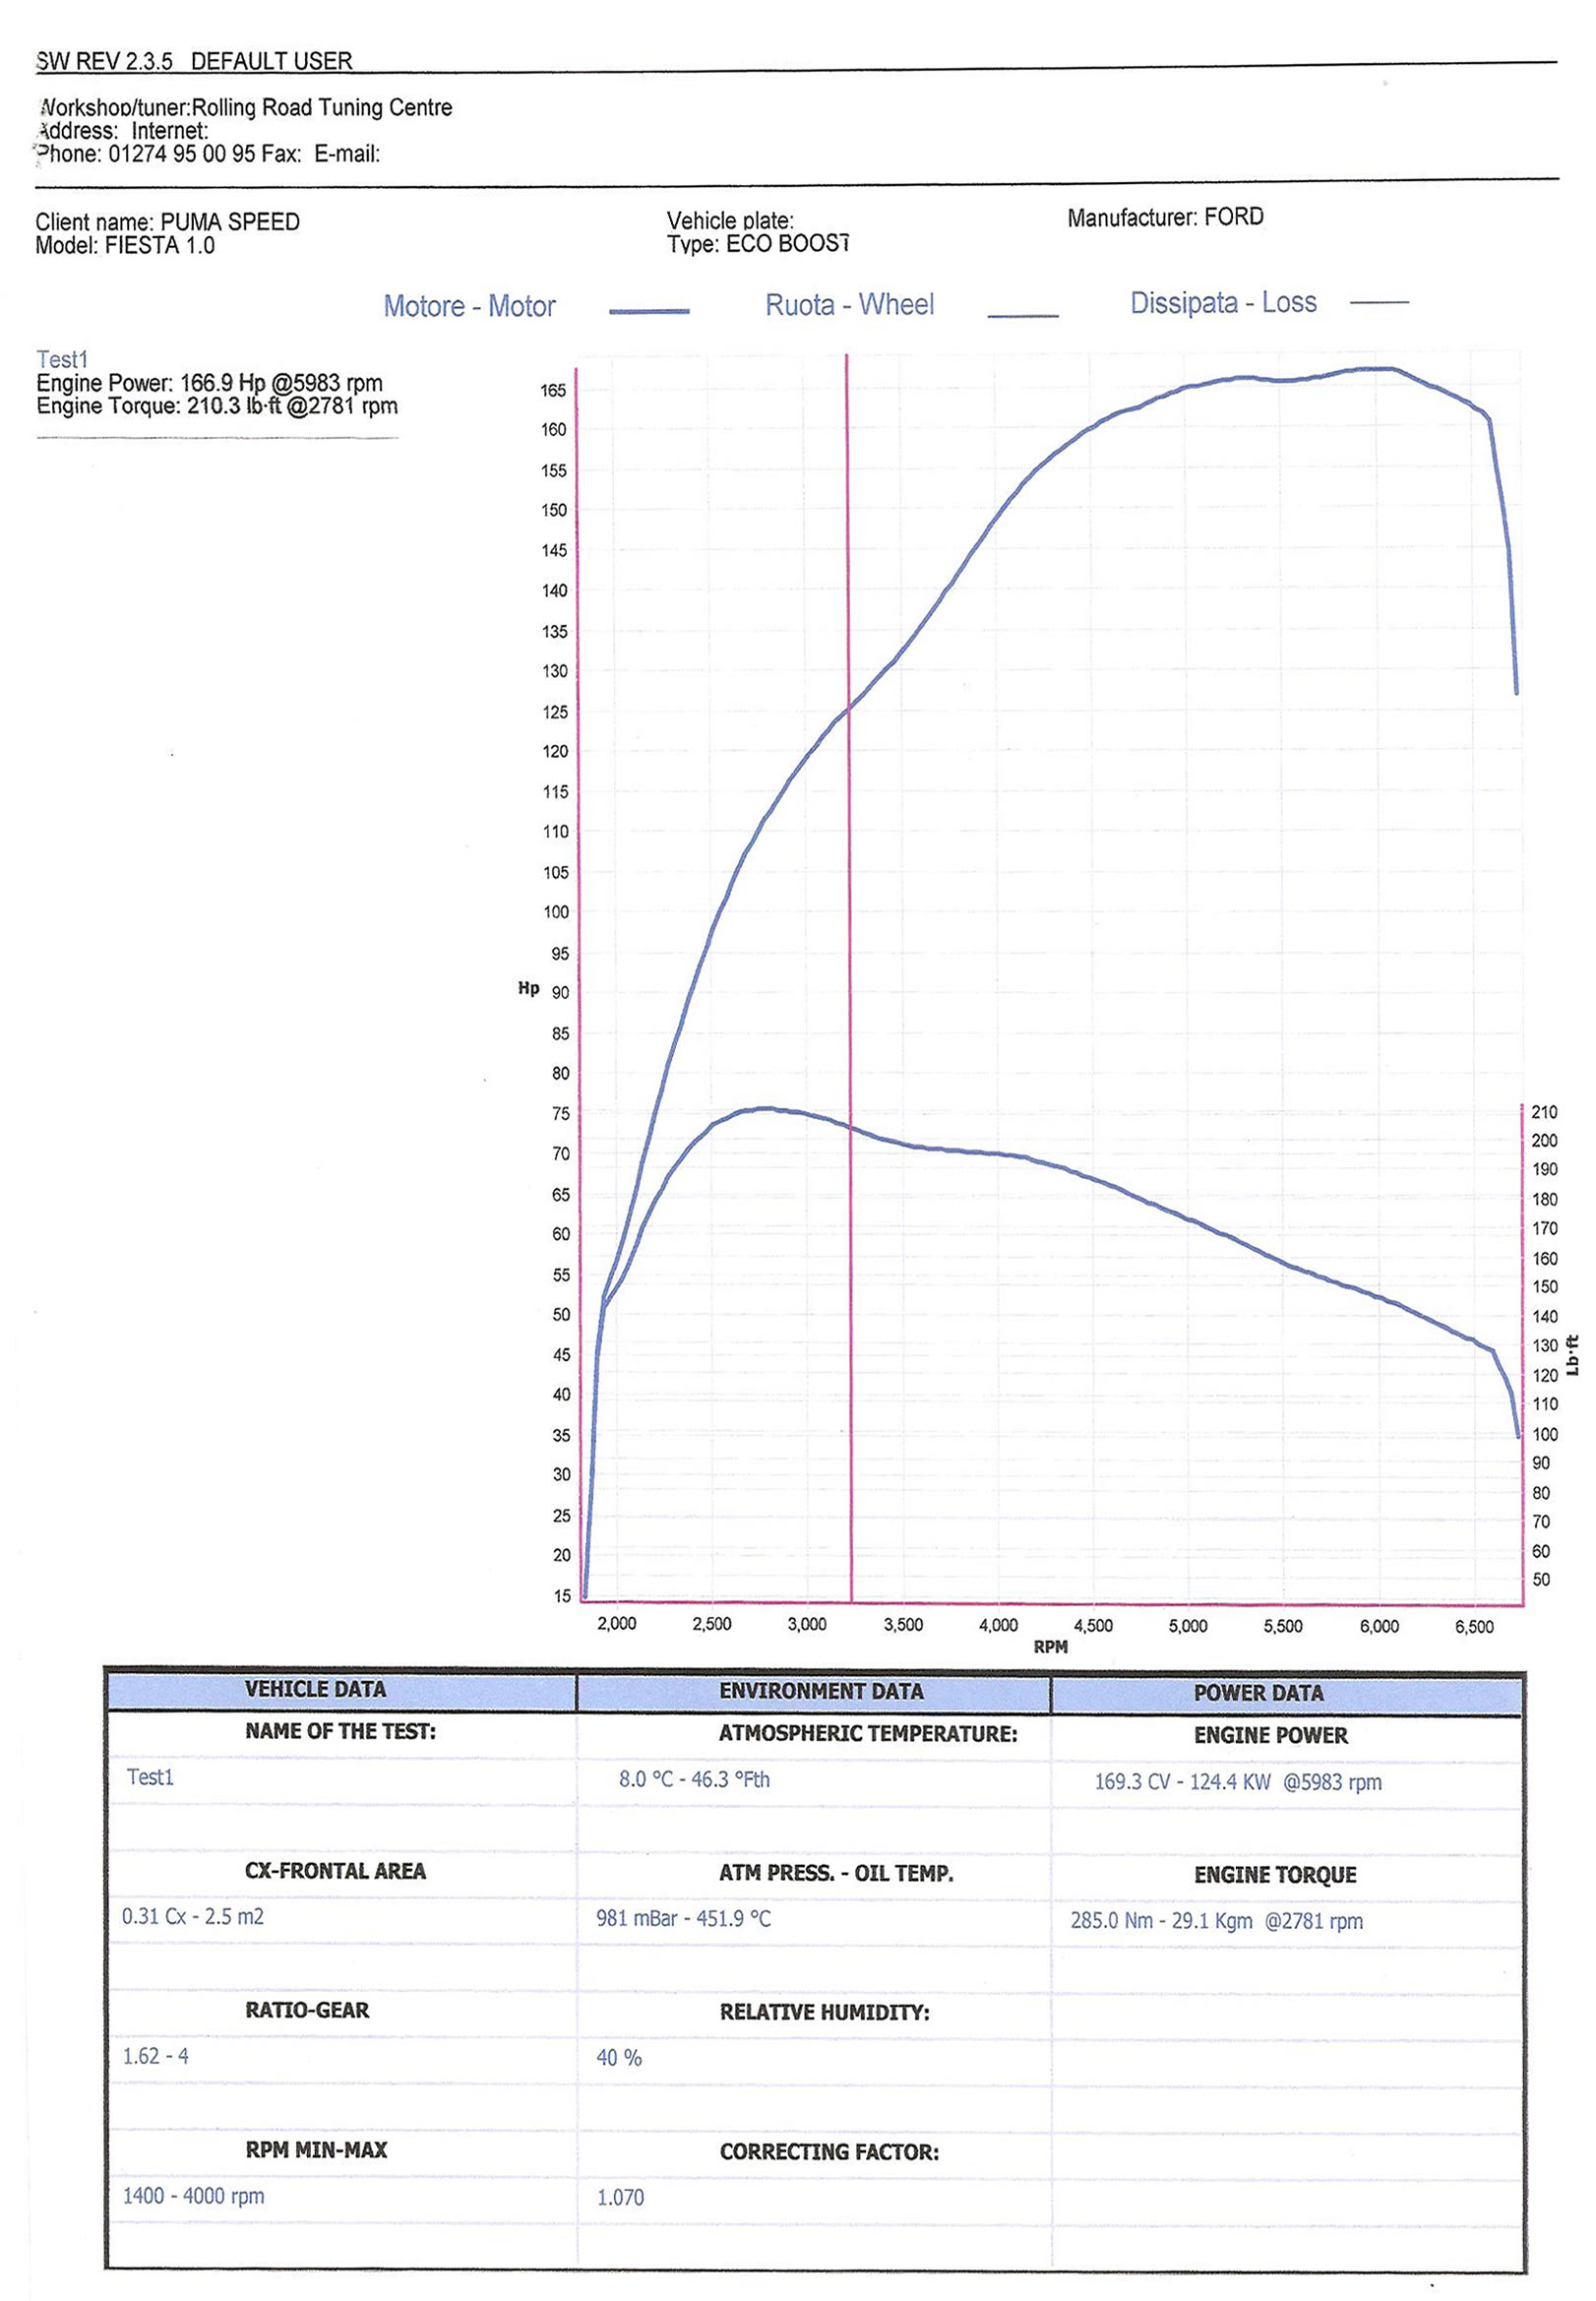 http://www.pumaspeed.co.uk/saved/Ford_Fiesta_1.0_turbo_ecoboost_166.8bhp_power_graph.jpg